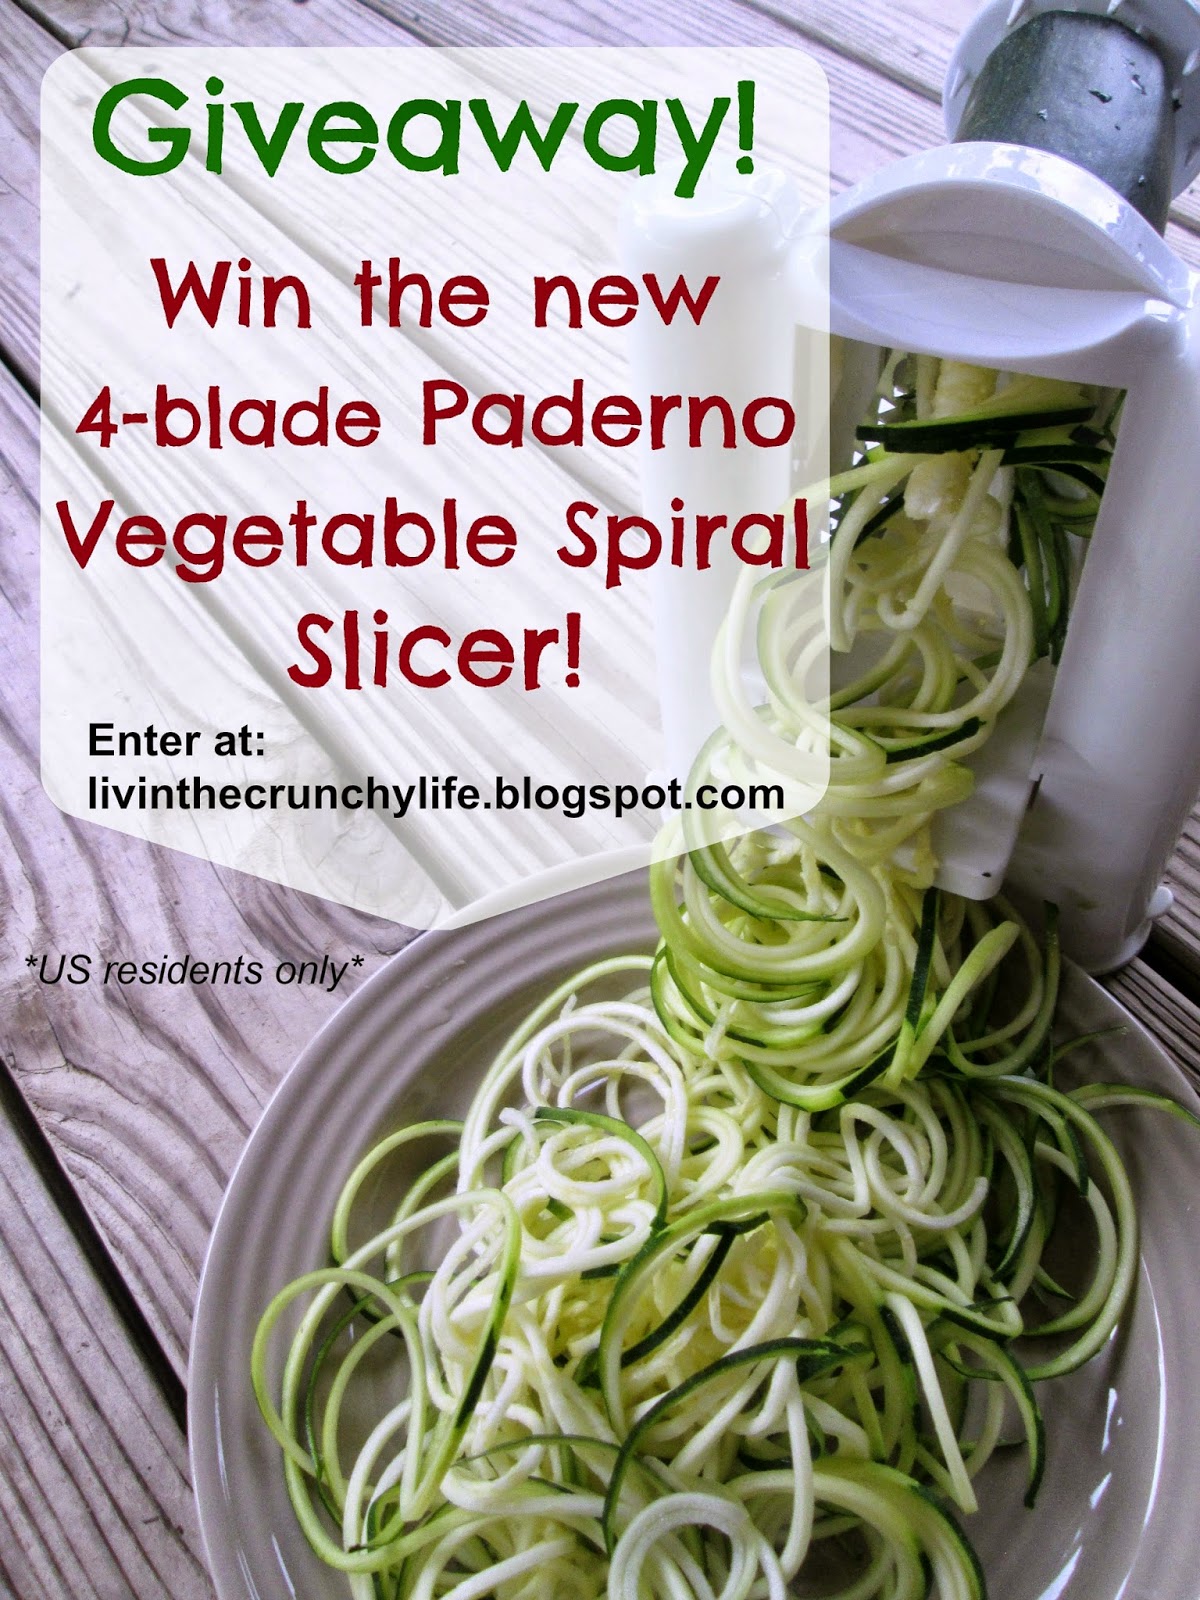 Giveaway! Win the new Paderno 4-blade Vegetable Spiral Slicer!